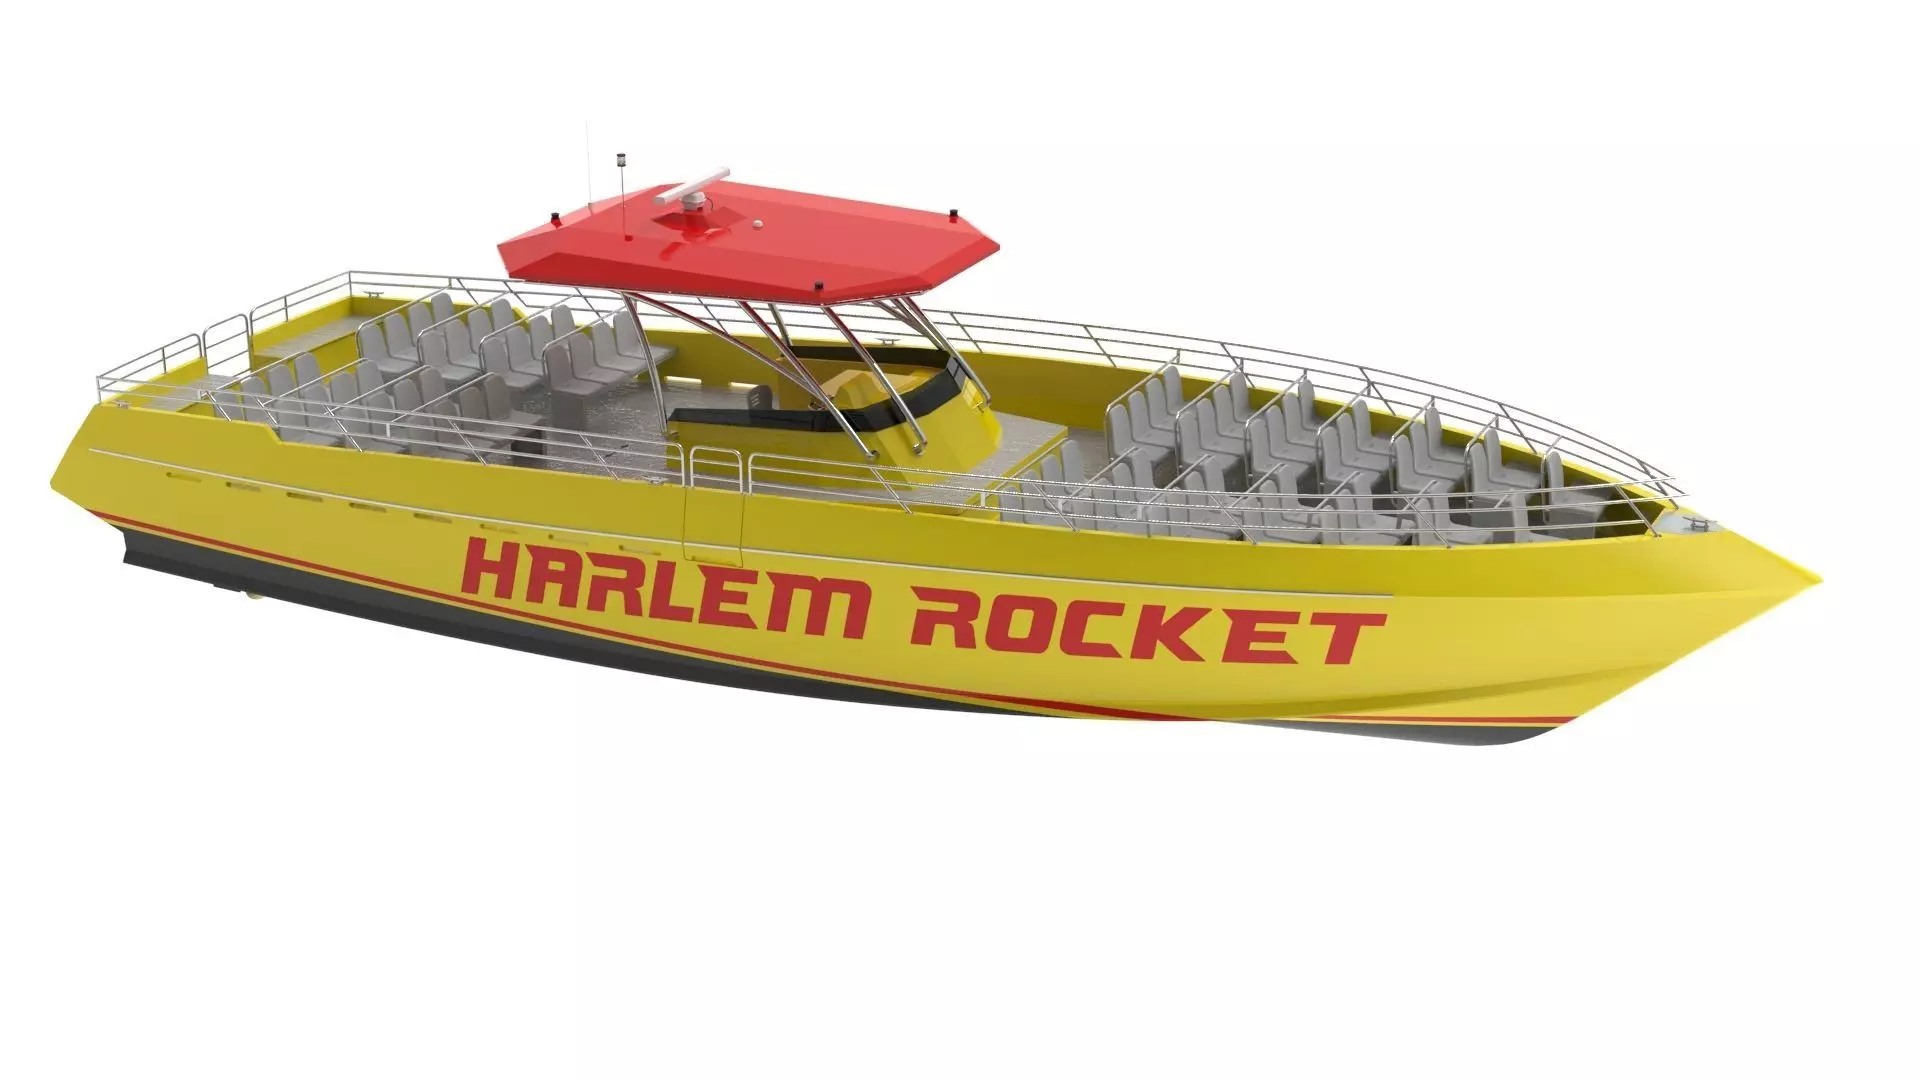 The Harlem Rocket